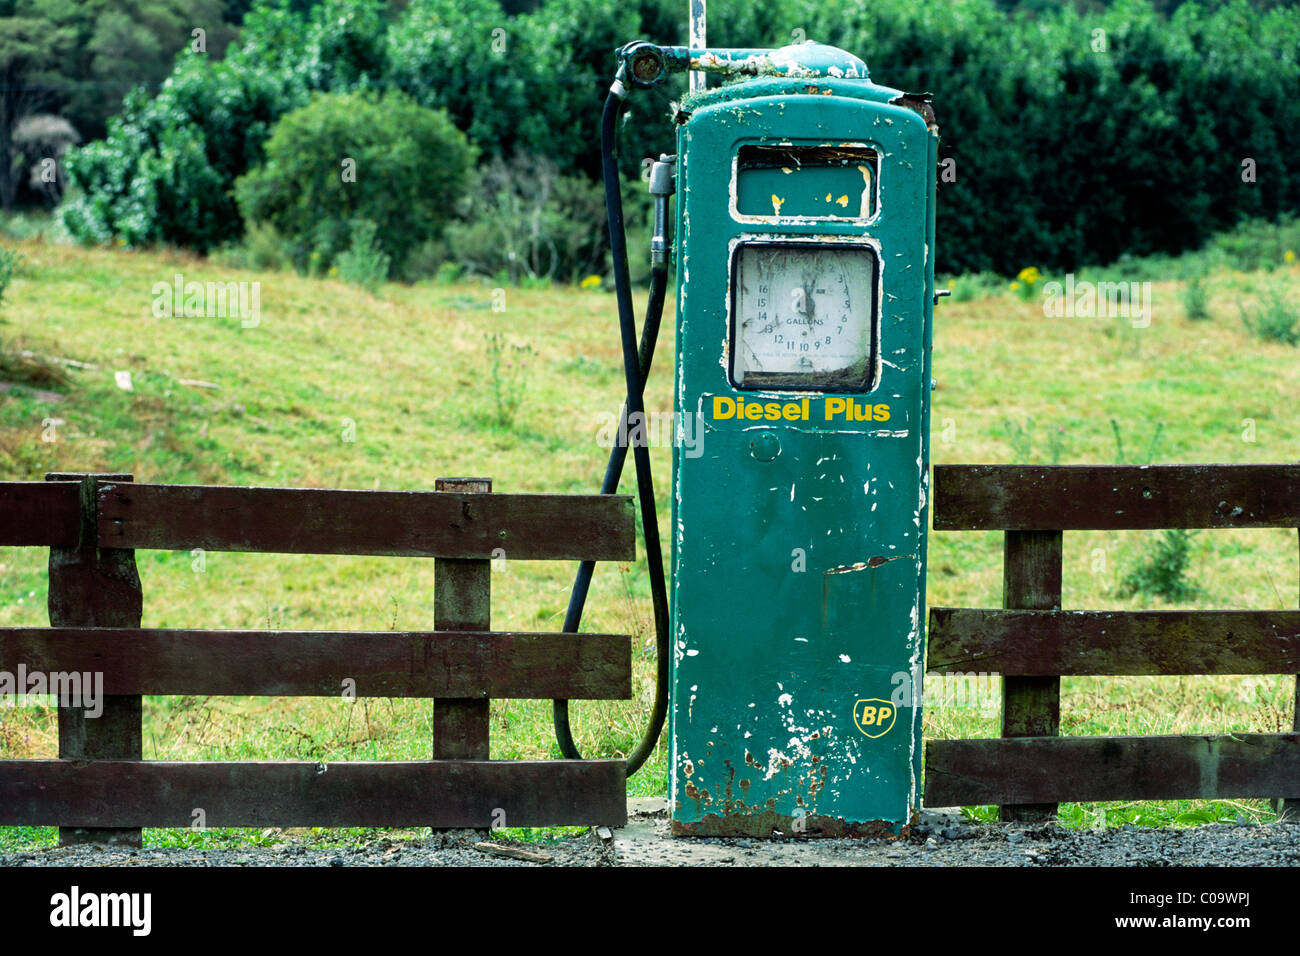 Worn petrol pump from BP, South Island, New Zealand Stock Photo